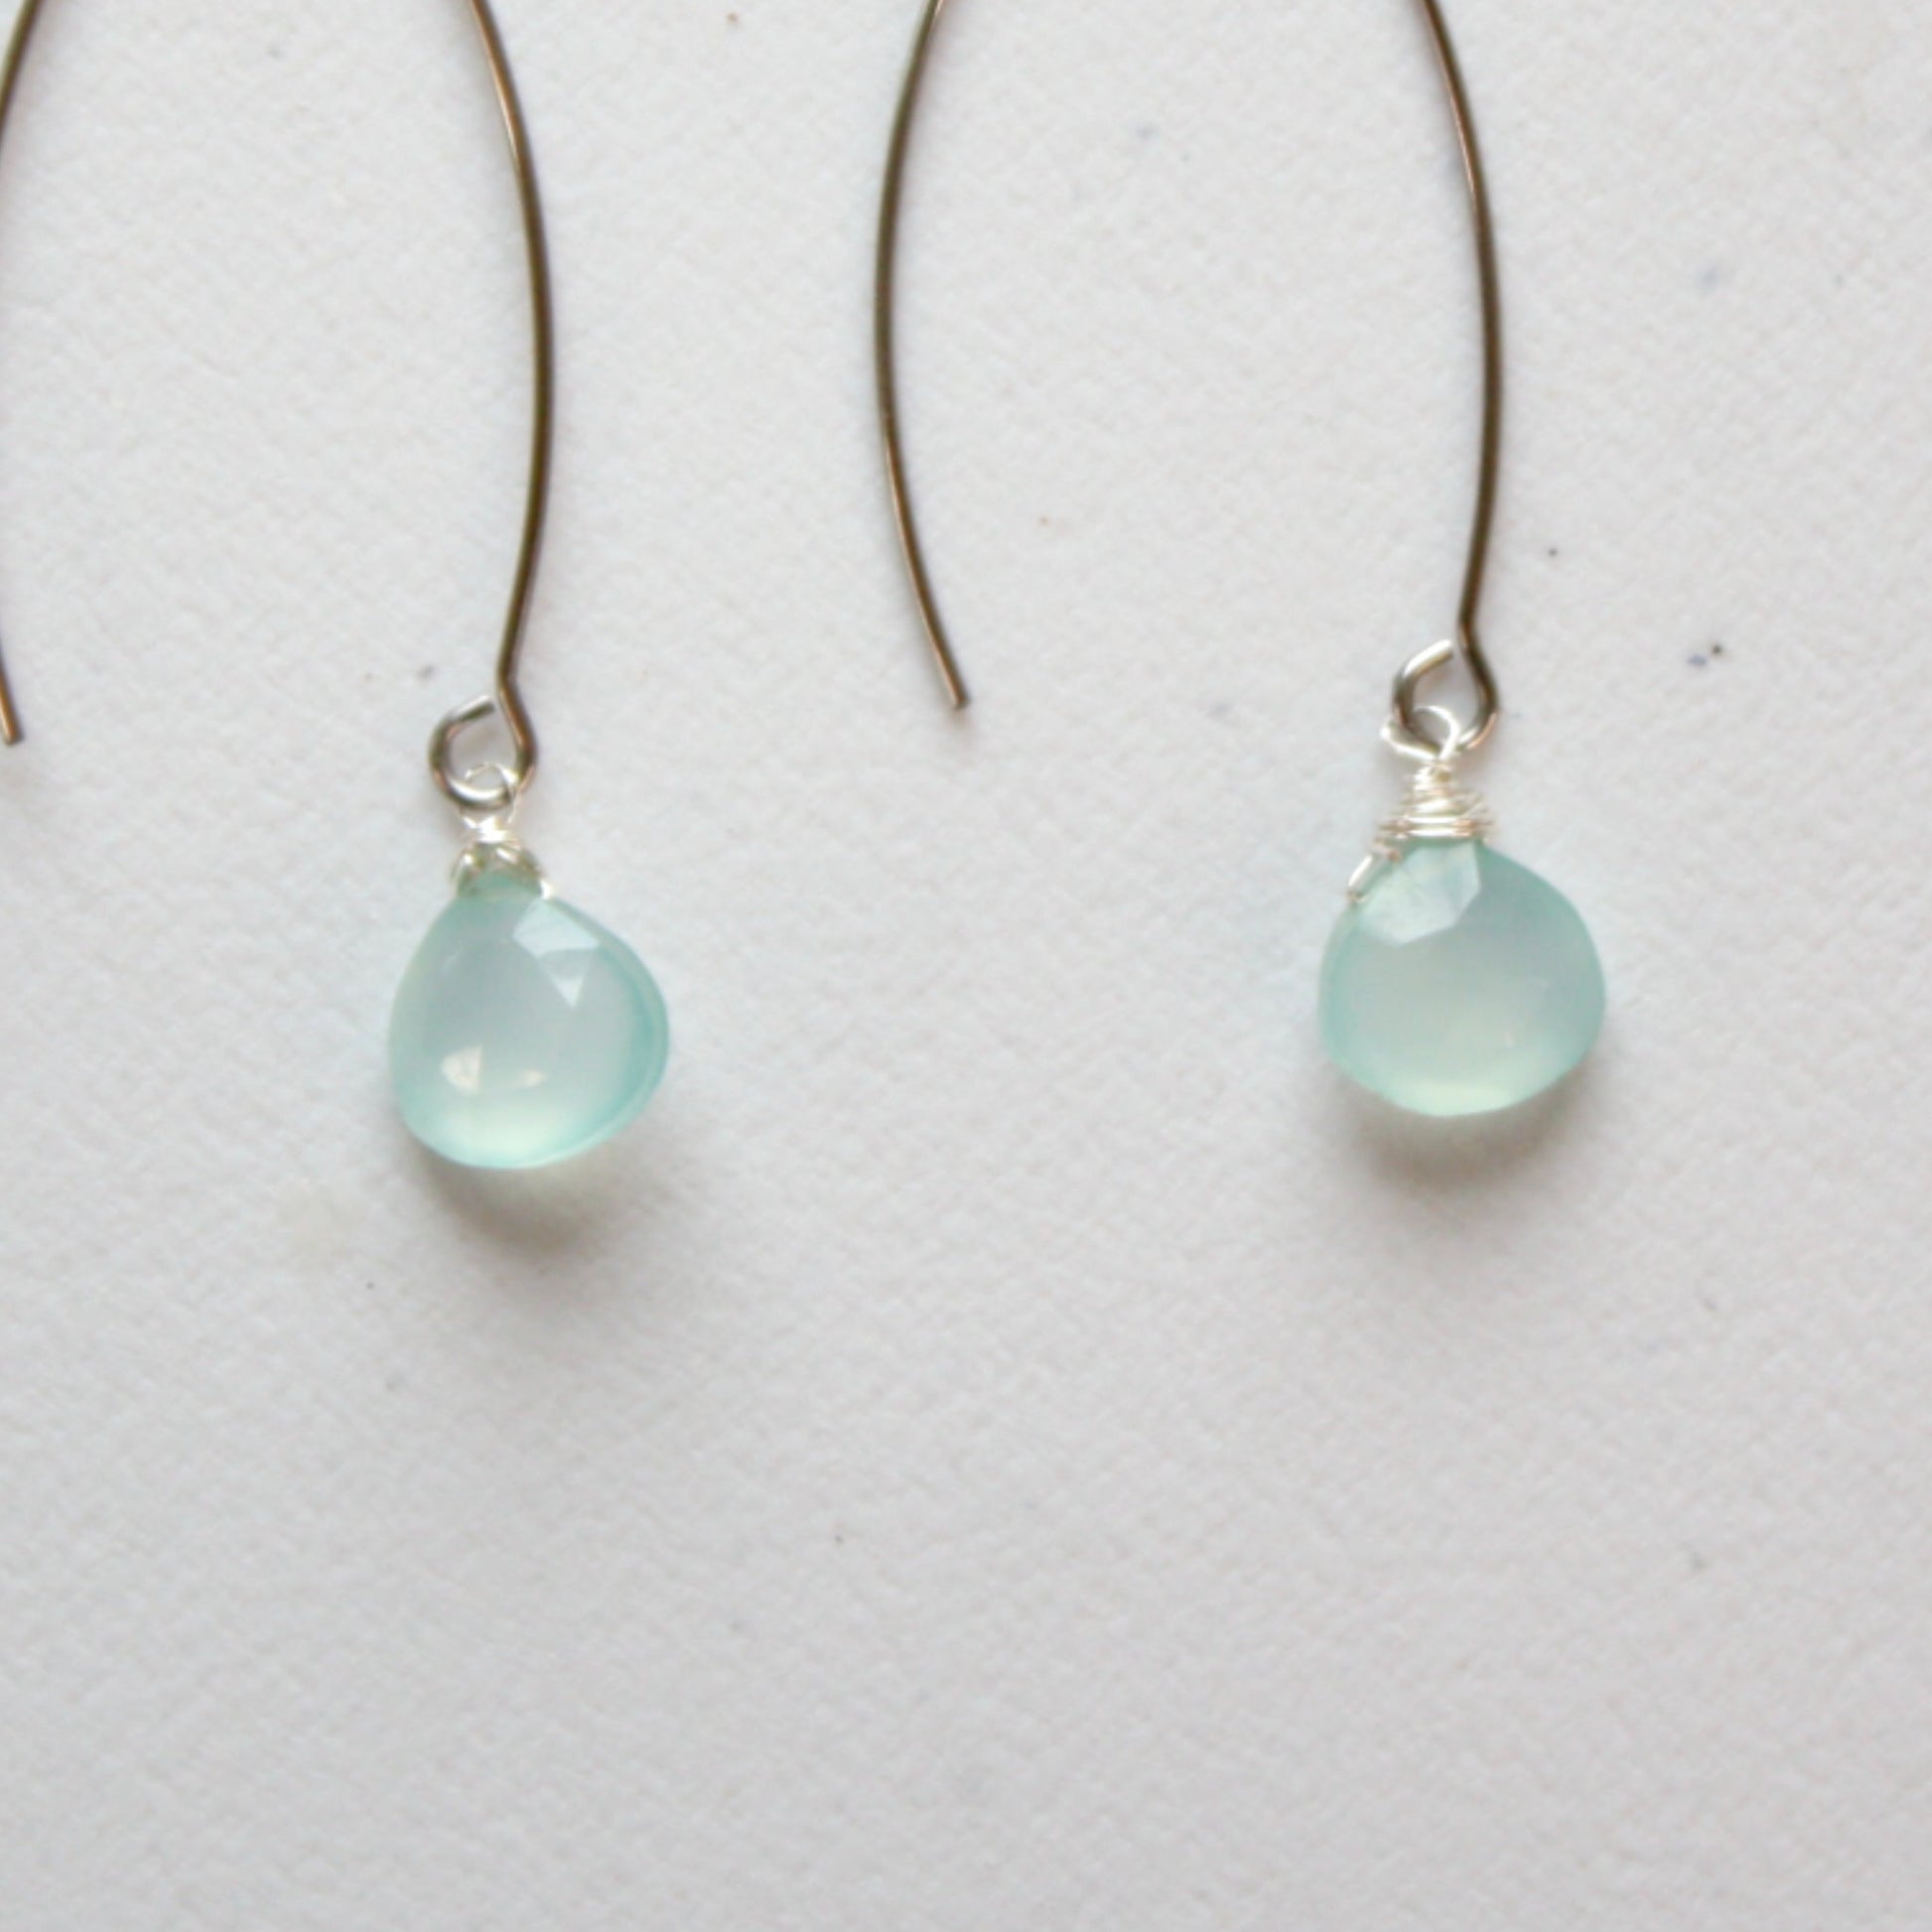 Aqua Teardrop Gemstone Boho Dangle Earrings - Made in the USA